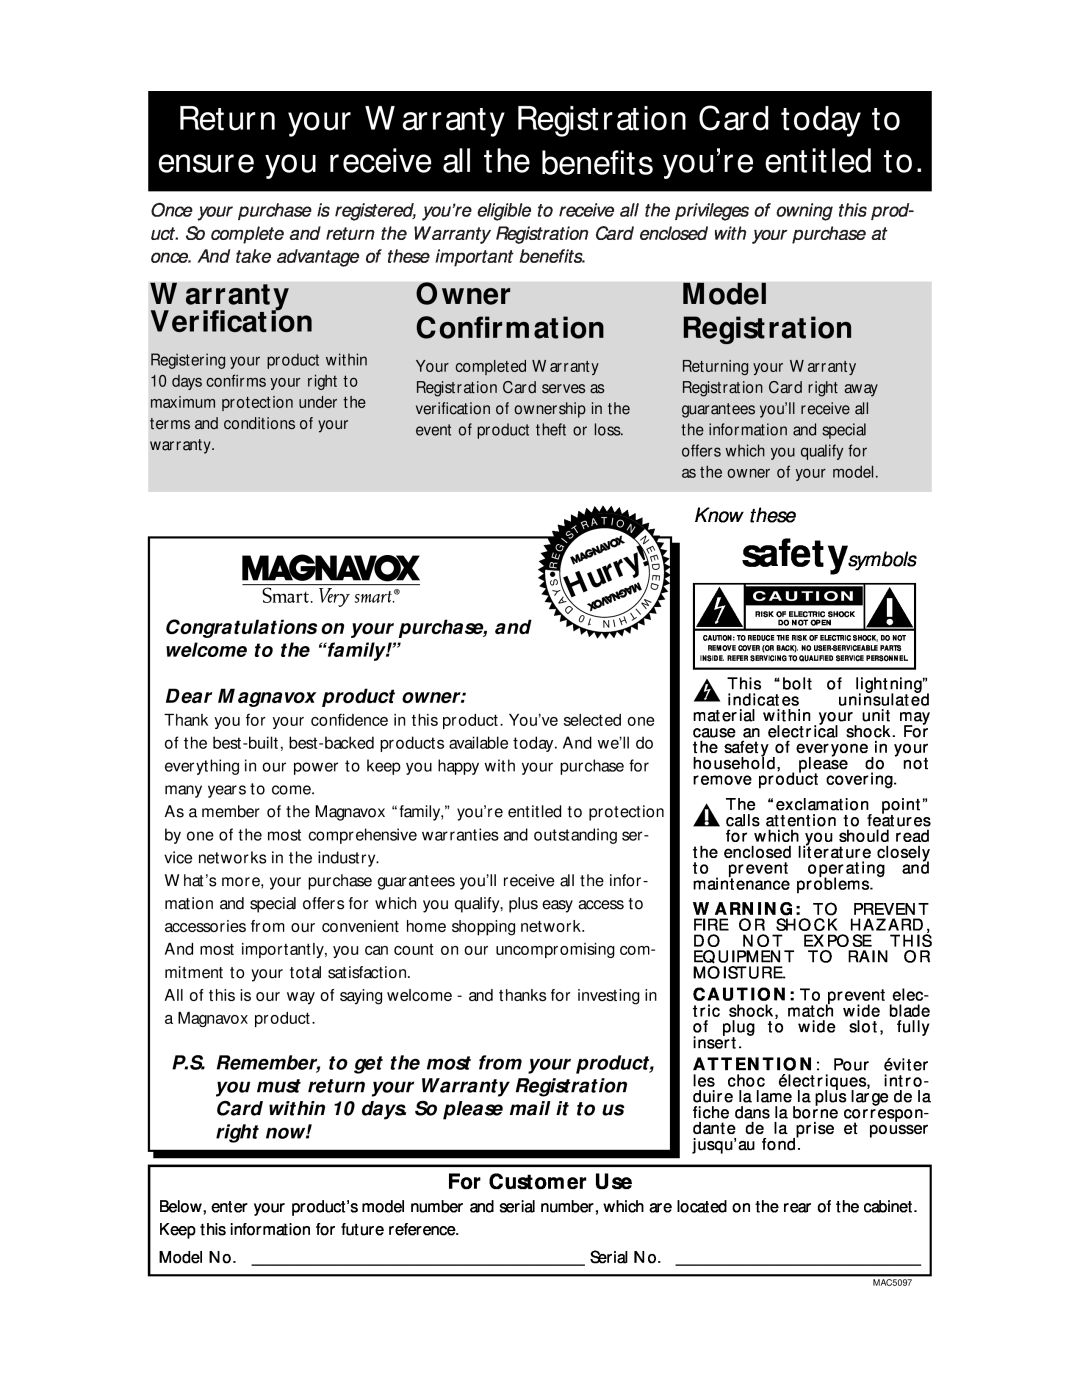 Magnavox VR401BMX, VR601BMX Warranty Verification, Owner Confirmation, AHurry, For Customer Use, Model Registration 